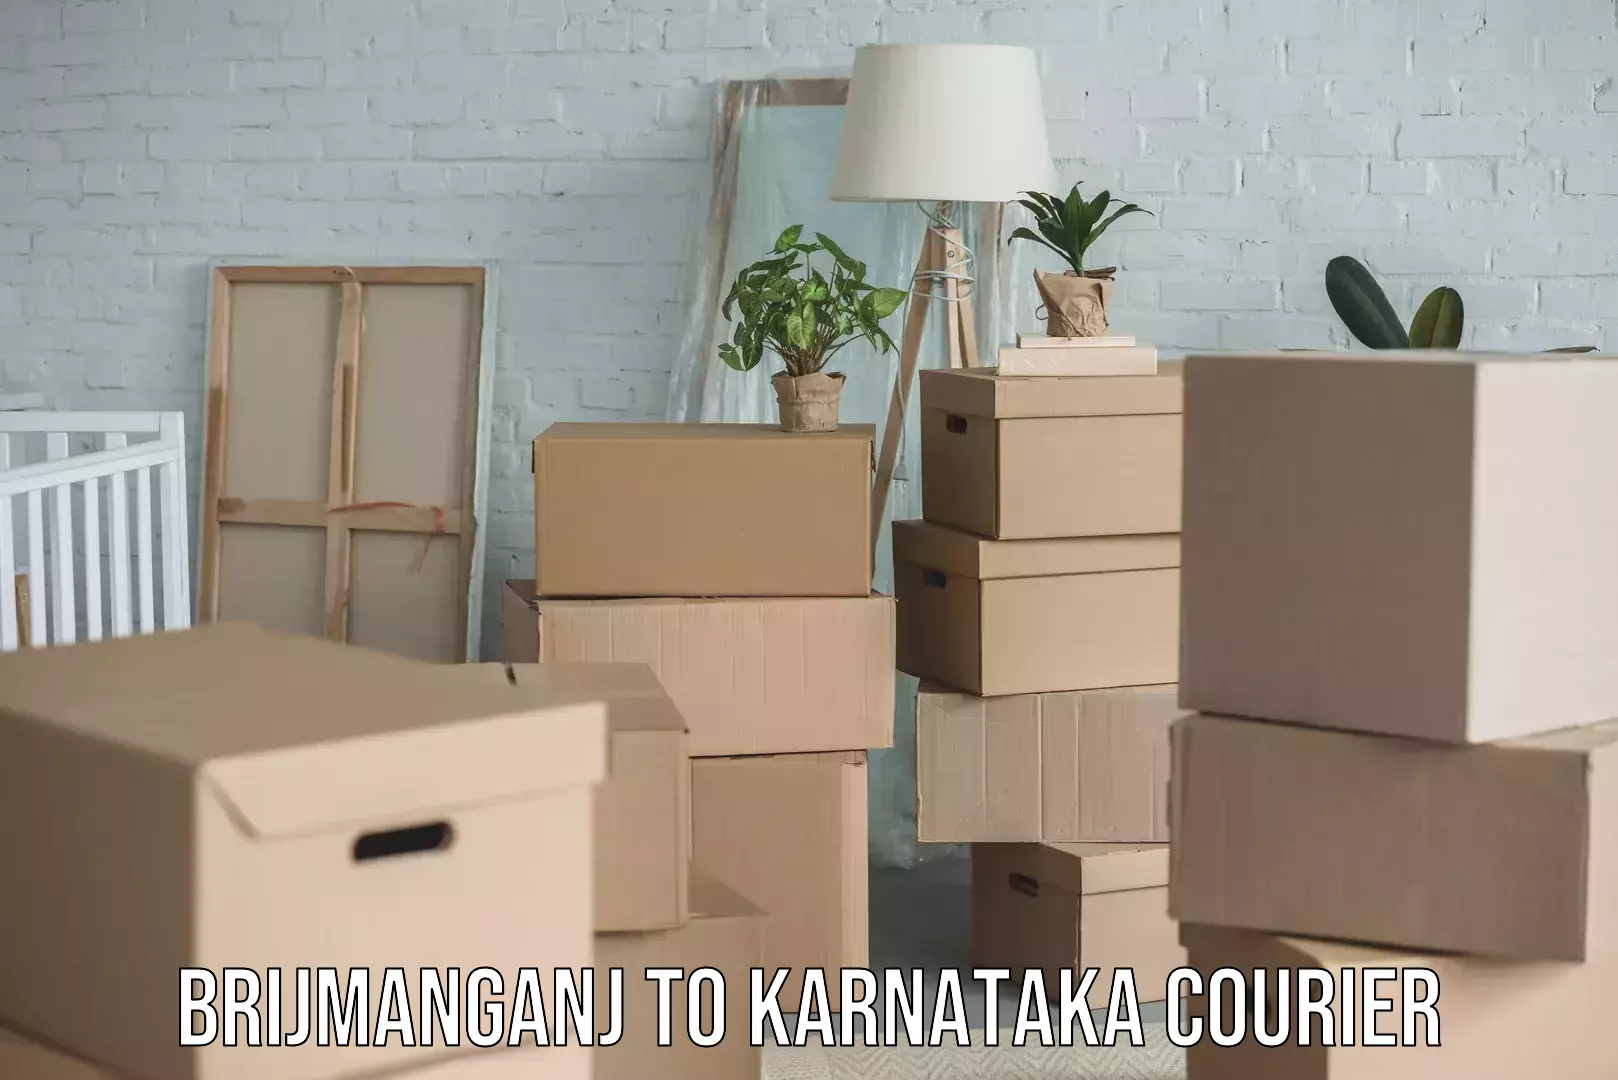 International parcel service Brijmanganj to Karnataka